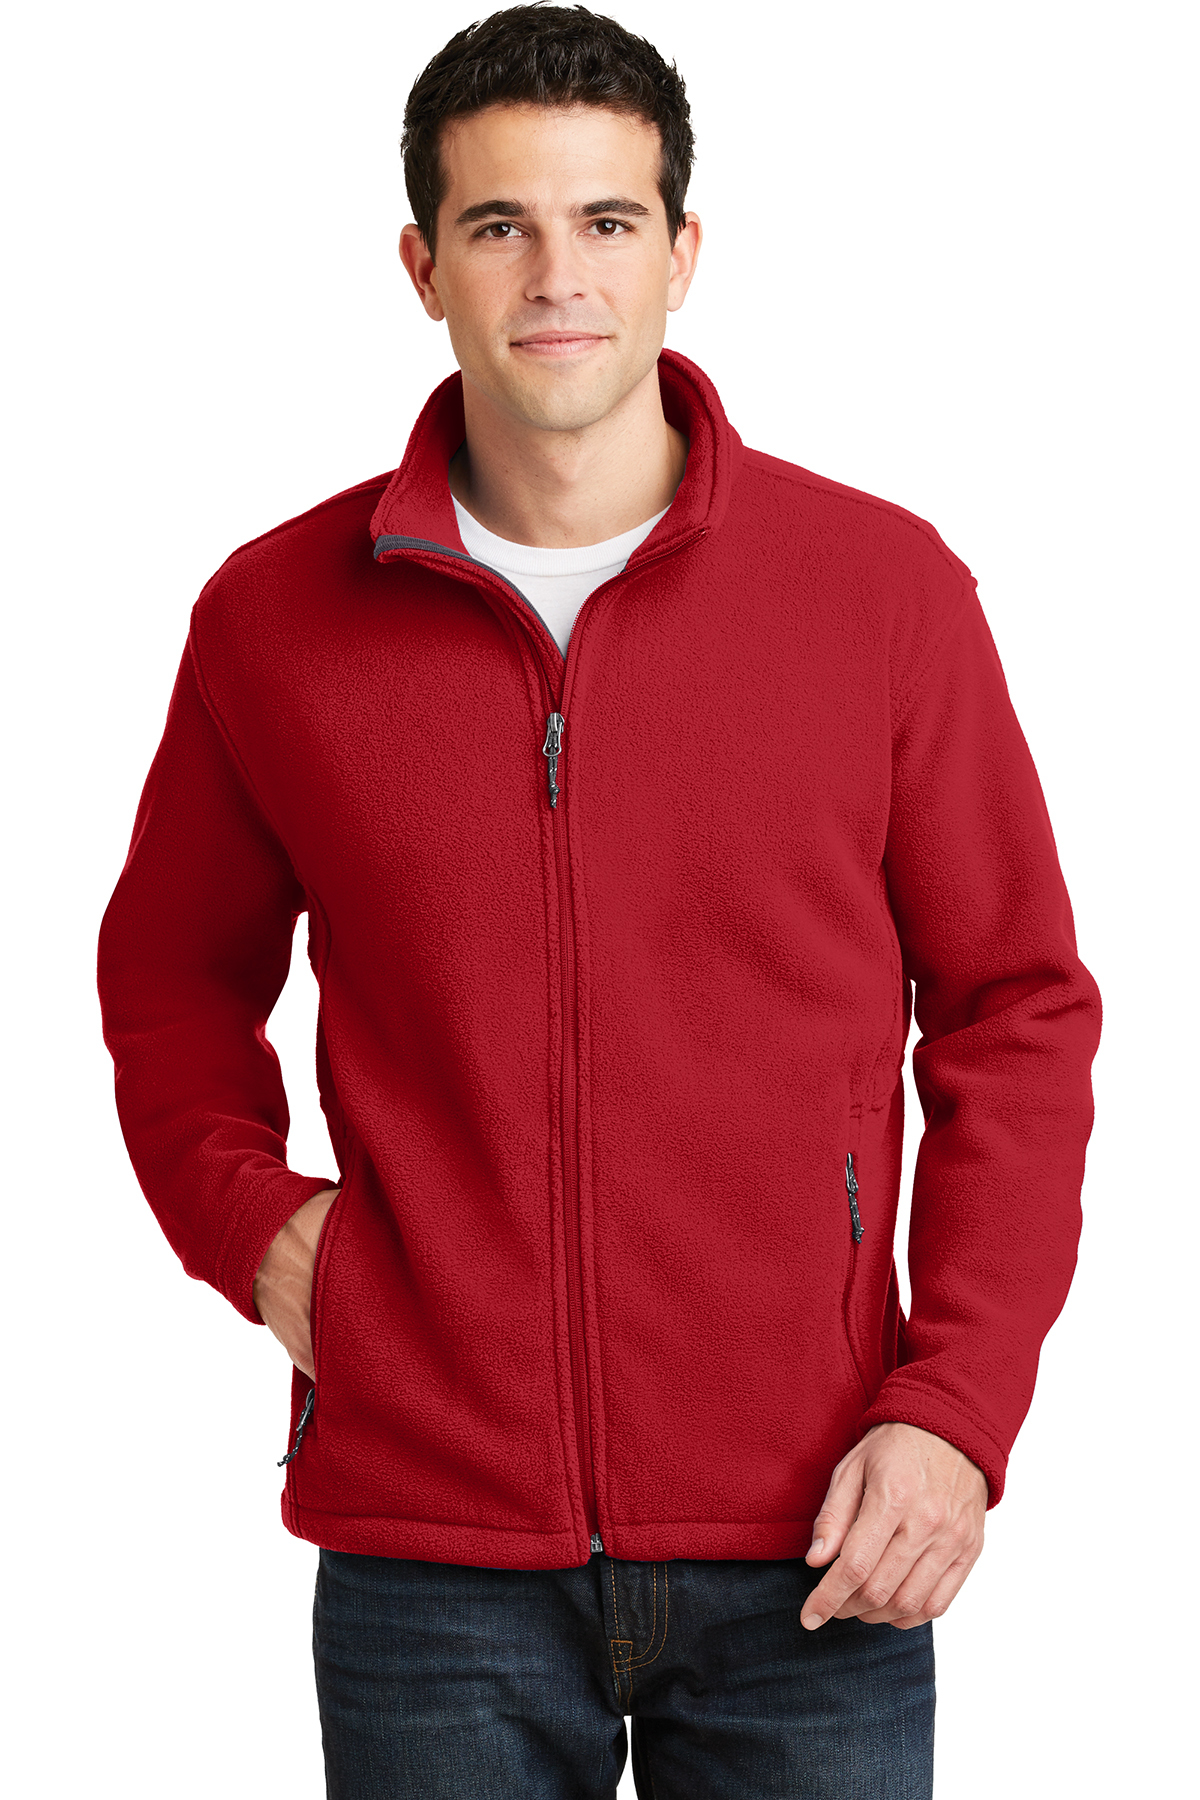 Smoothie King - Port Authority® Value Fleece Jacket